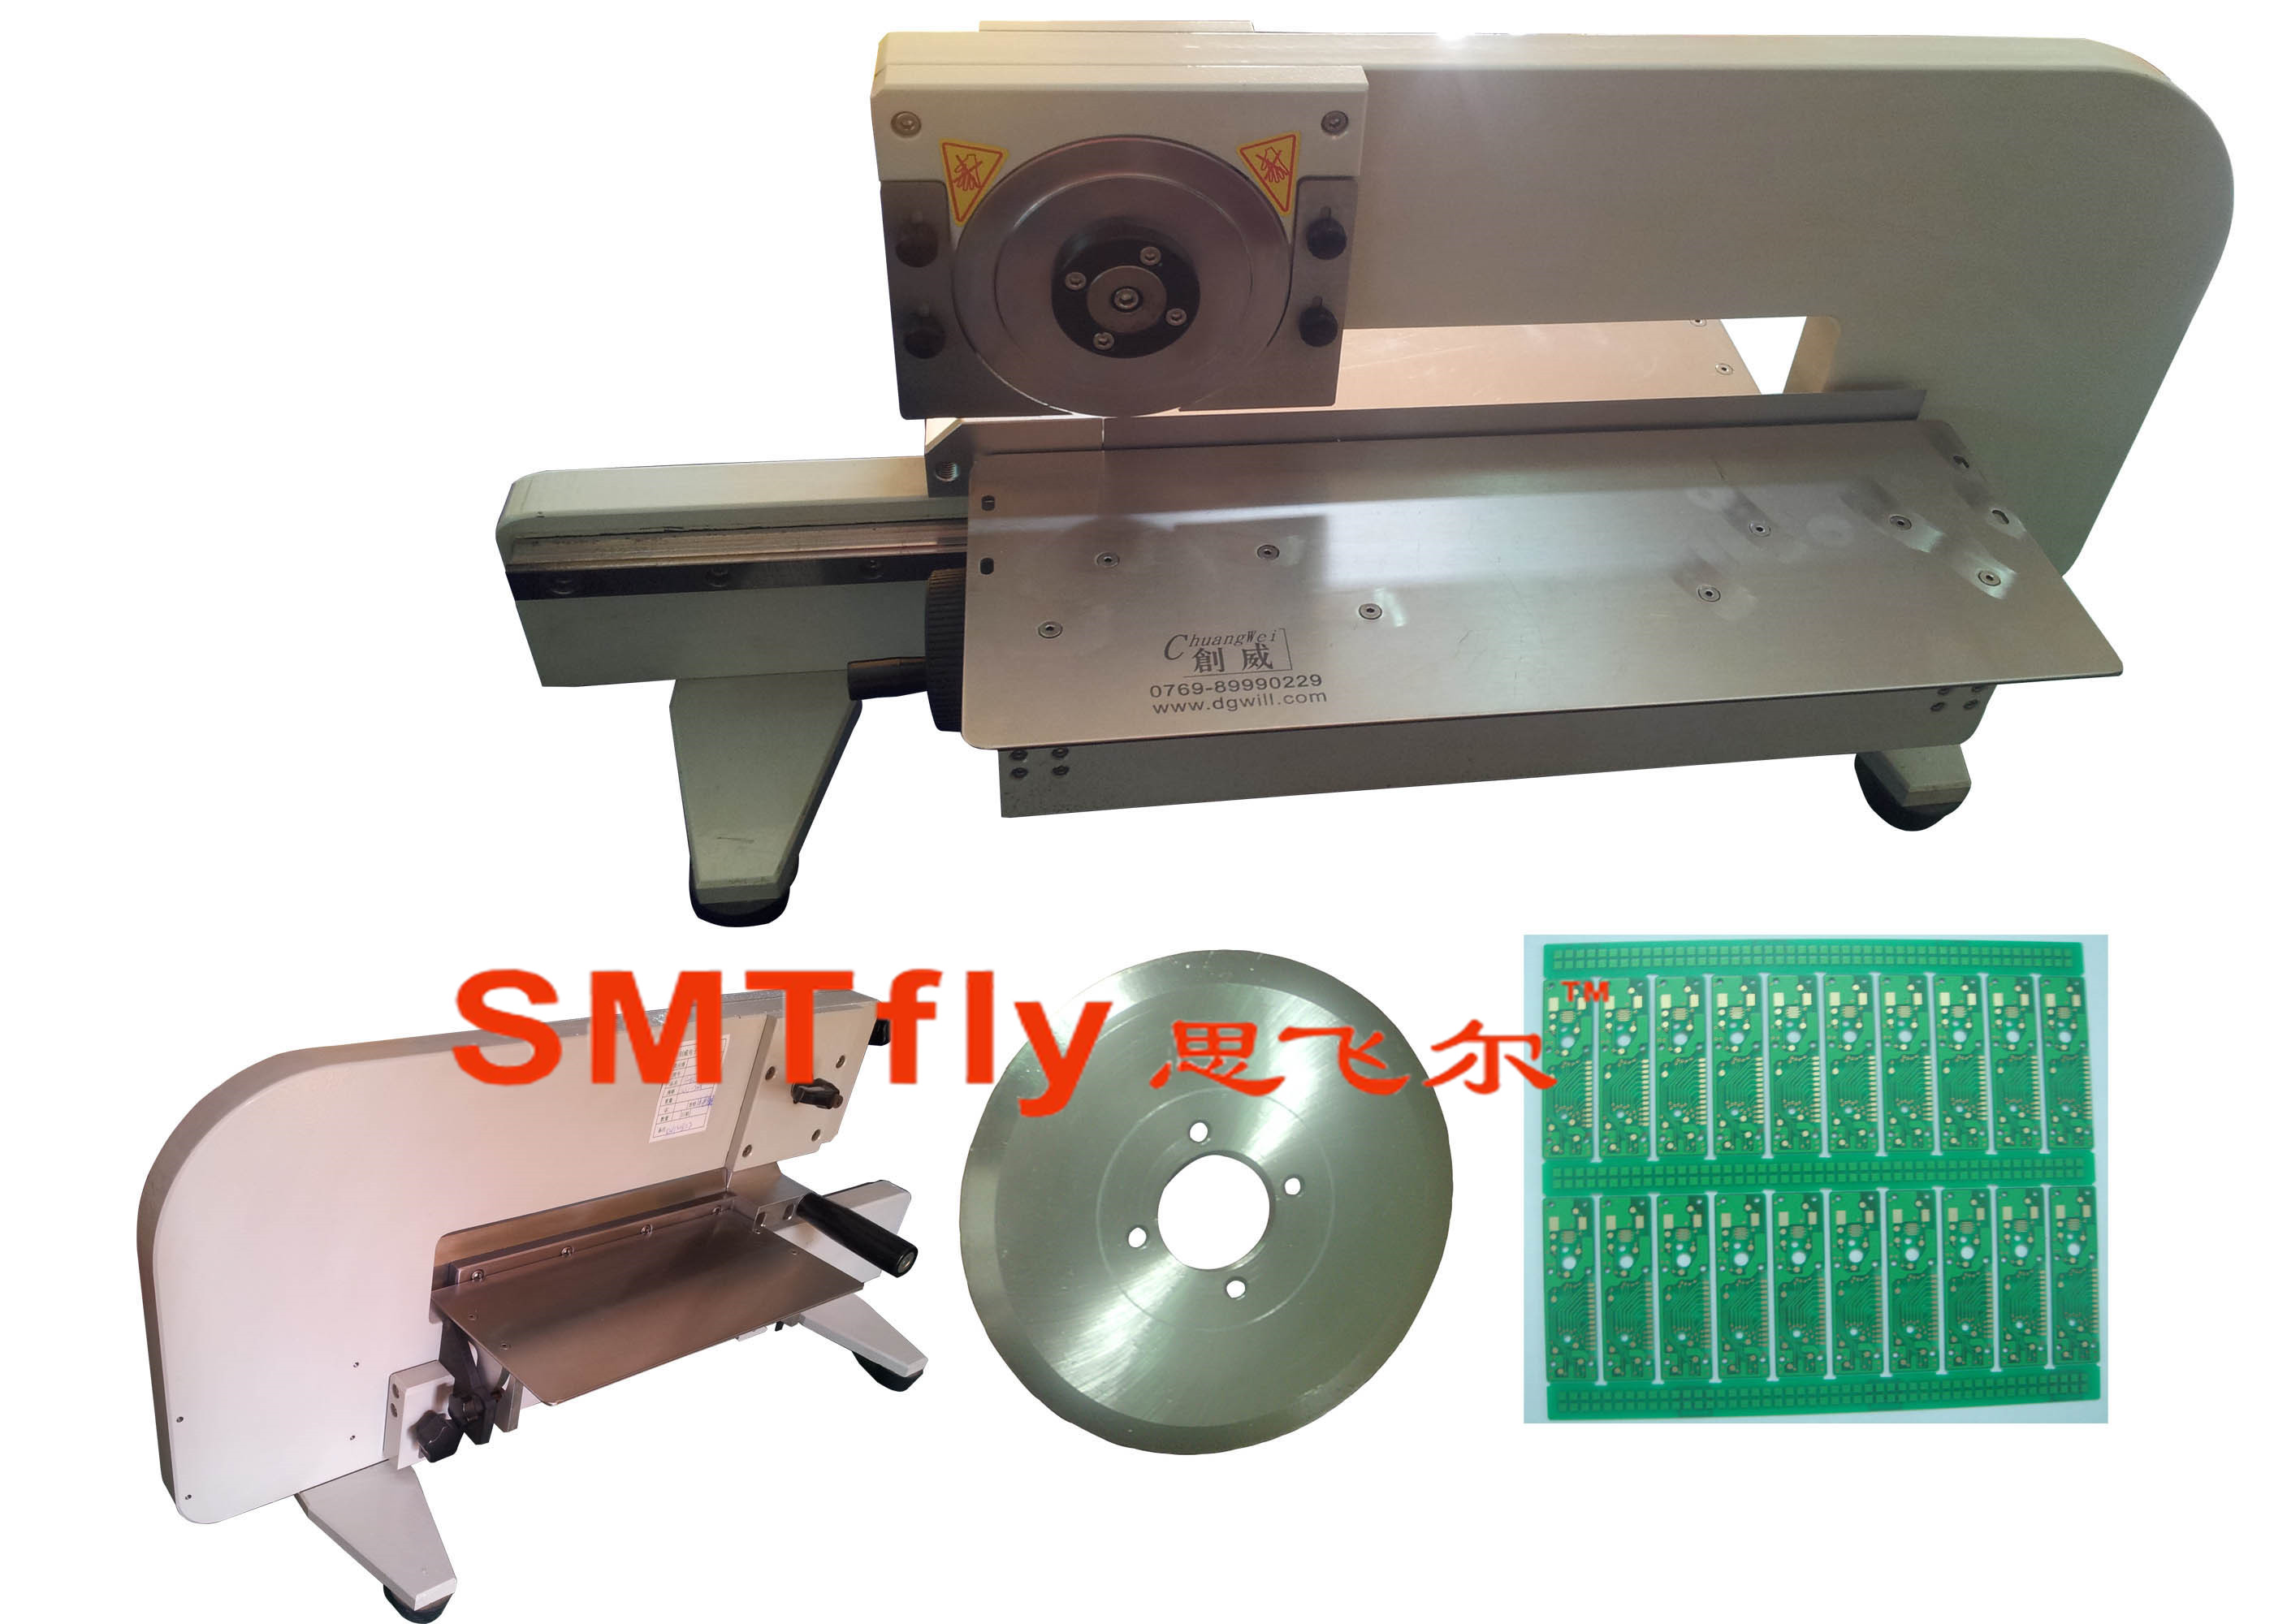 Manual PCB Board Cutting Machine,SMTfly-2M